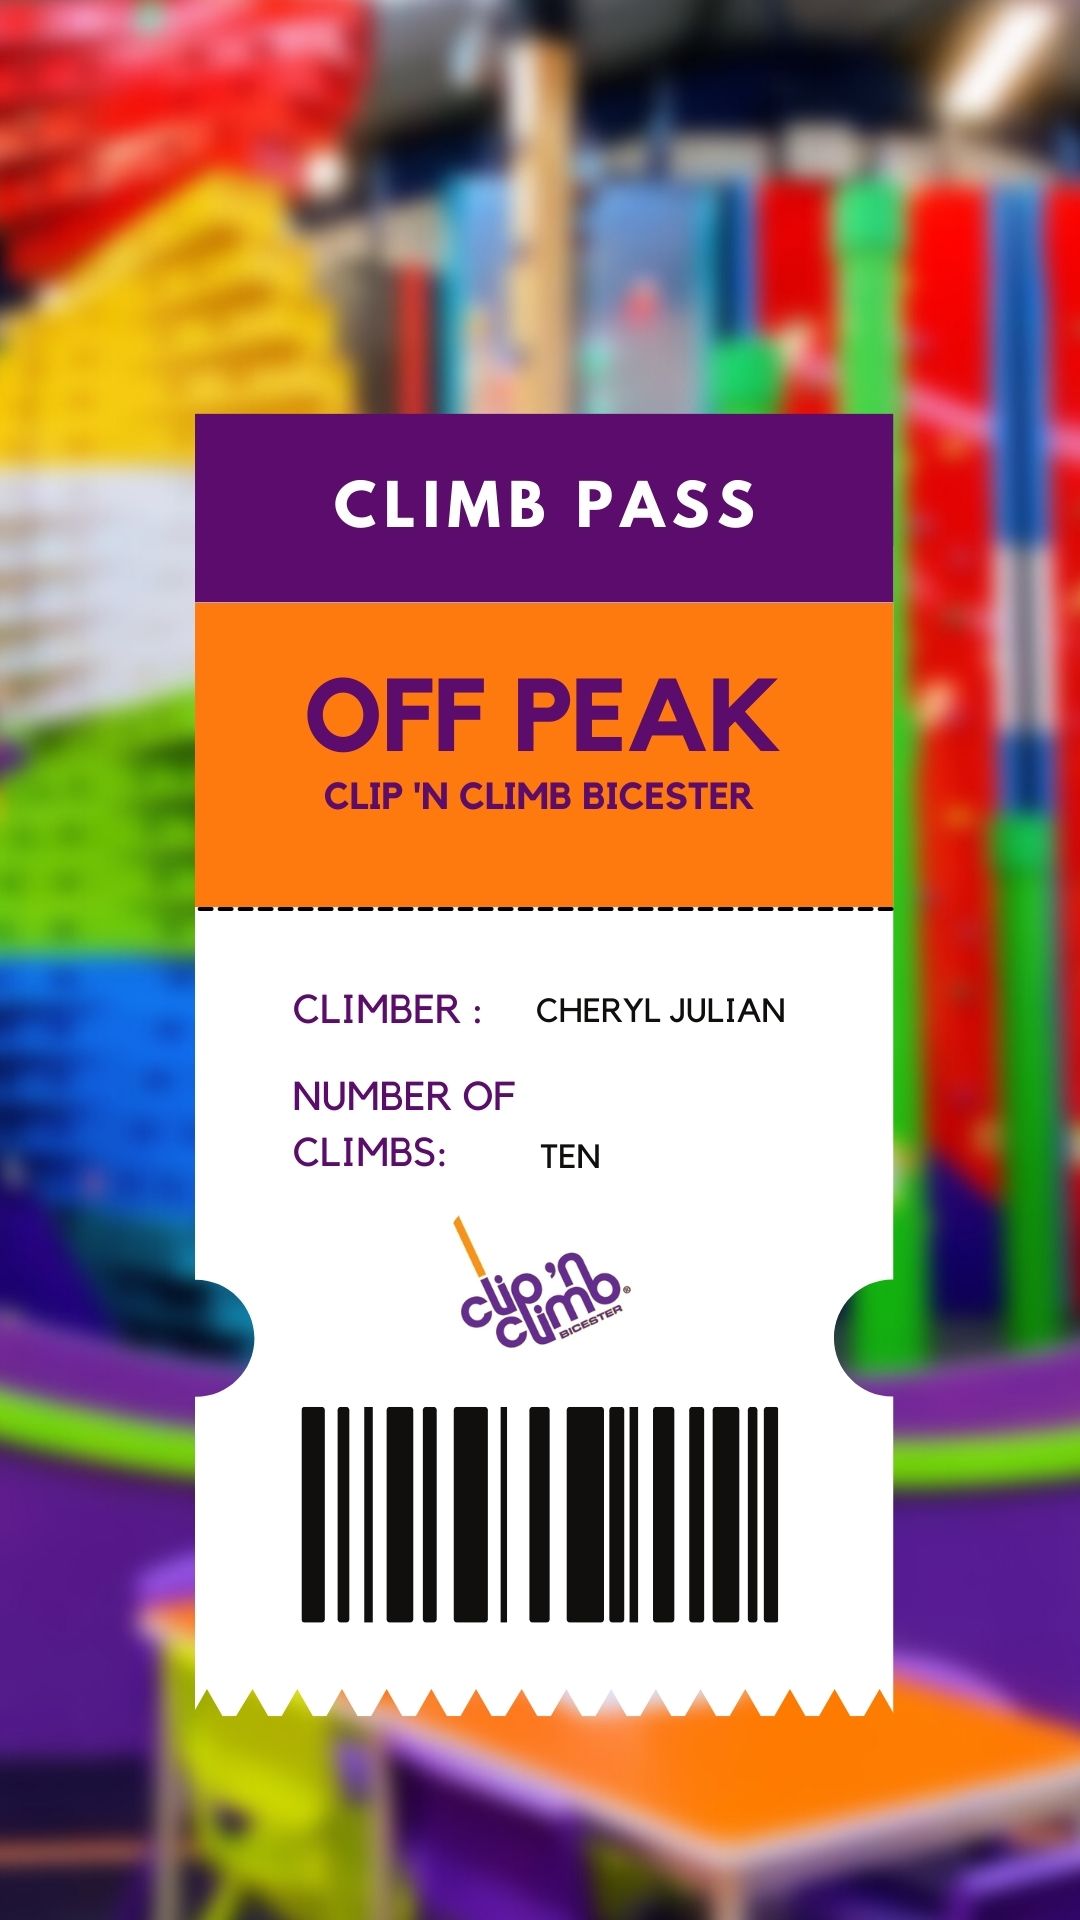 Save with a climb pass